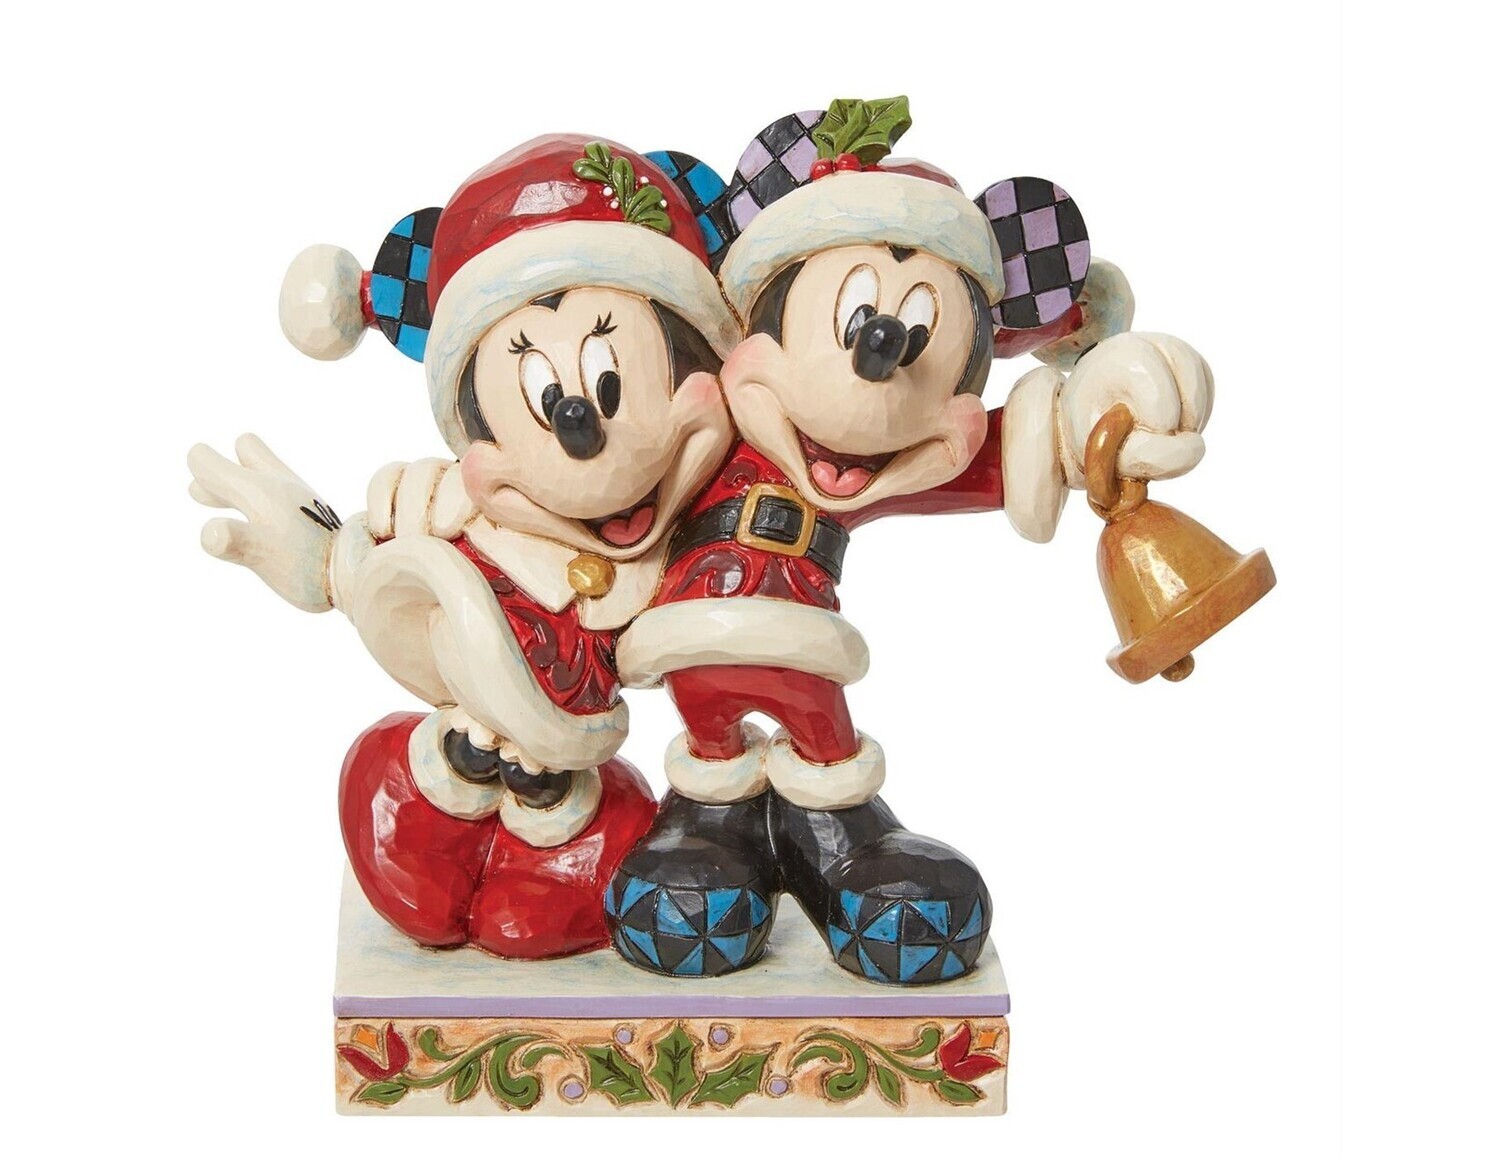 Jim Shore Disney Traditions "Jingle Bell" Mickey & Minnie Santa Figurine Enesco # 6013058